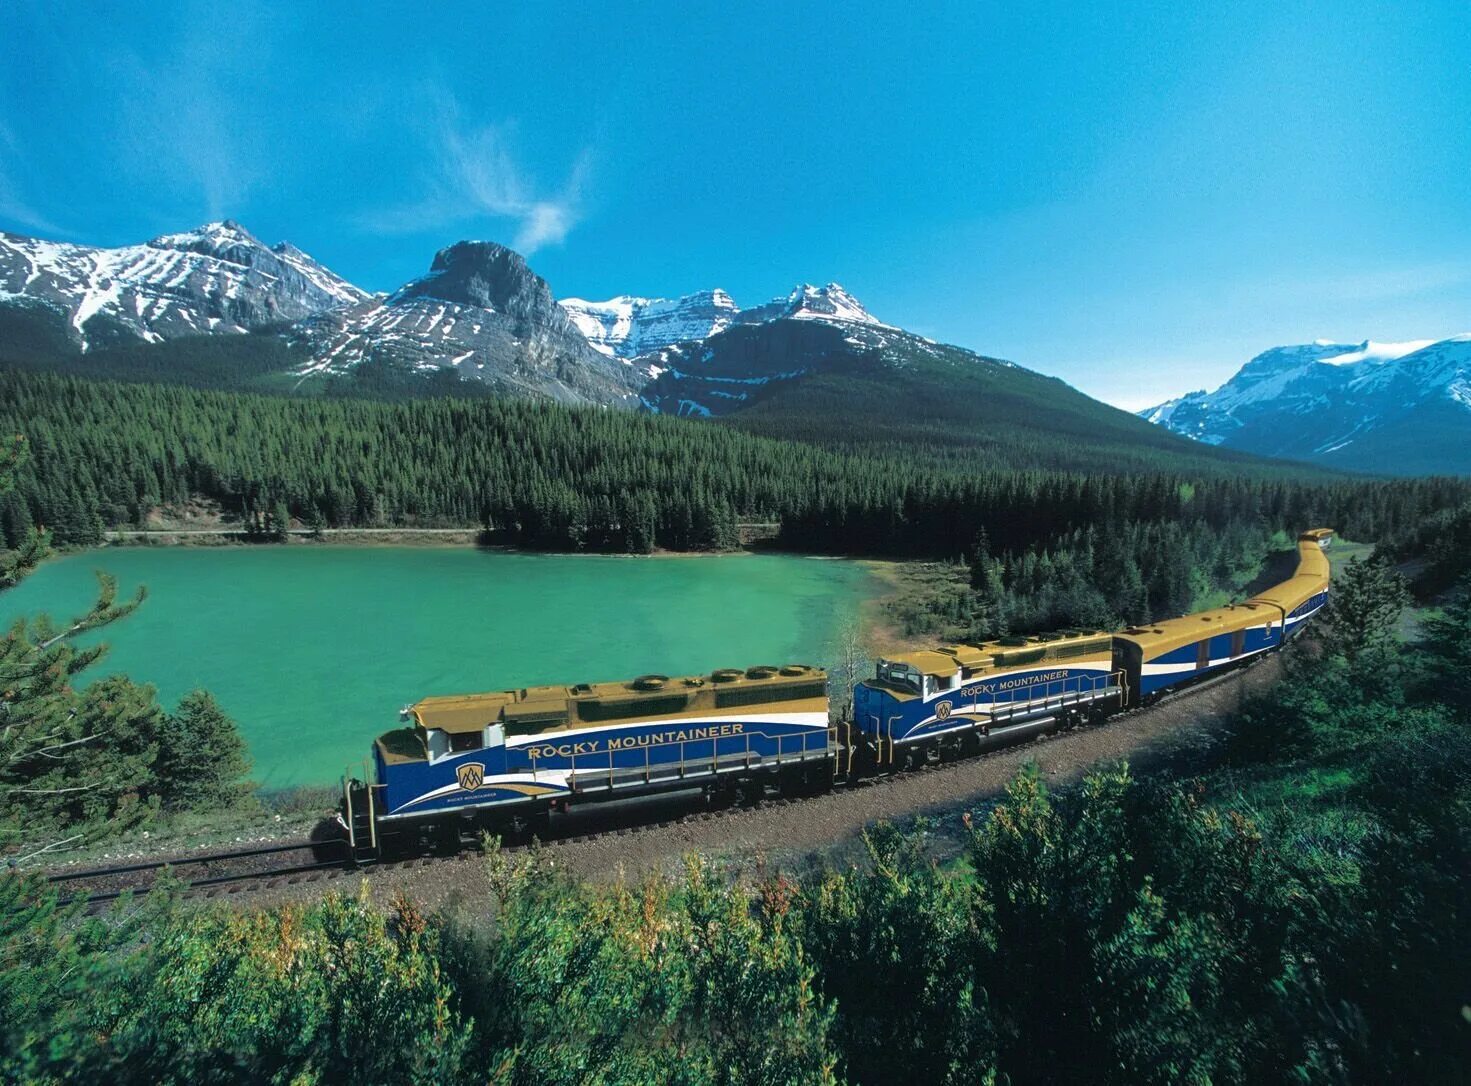 Rocky Mountaineer (Канада). Фломская железная дорога Норвегия. Rocky Mountaineer поезд. Железная дорога в скалистых горах Канада.